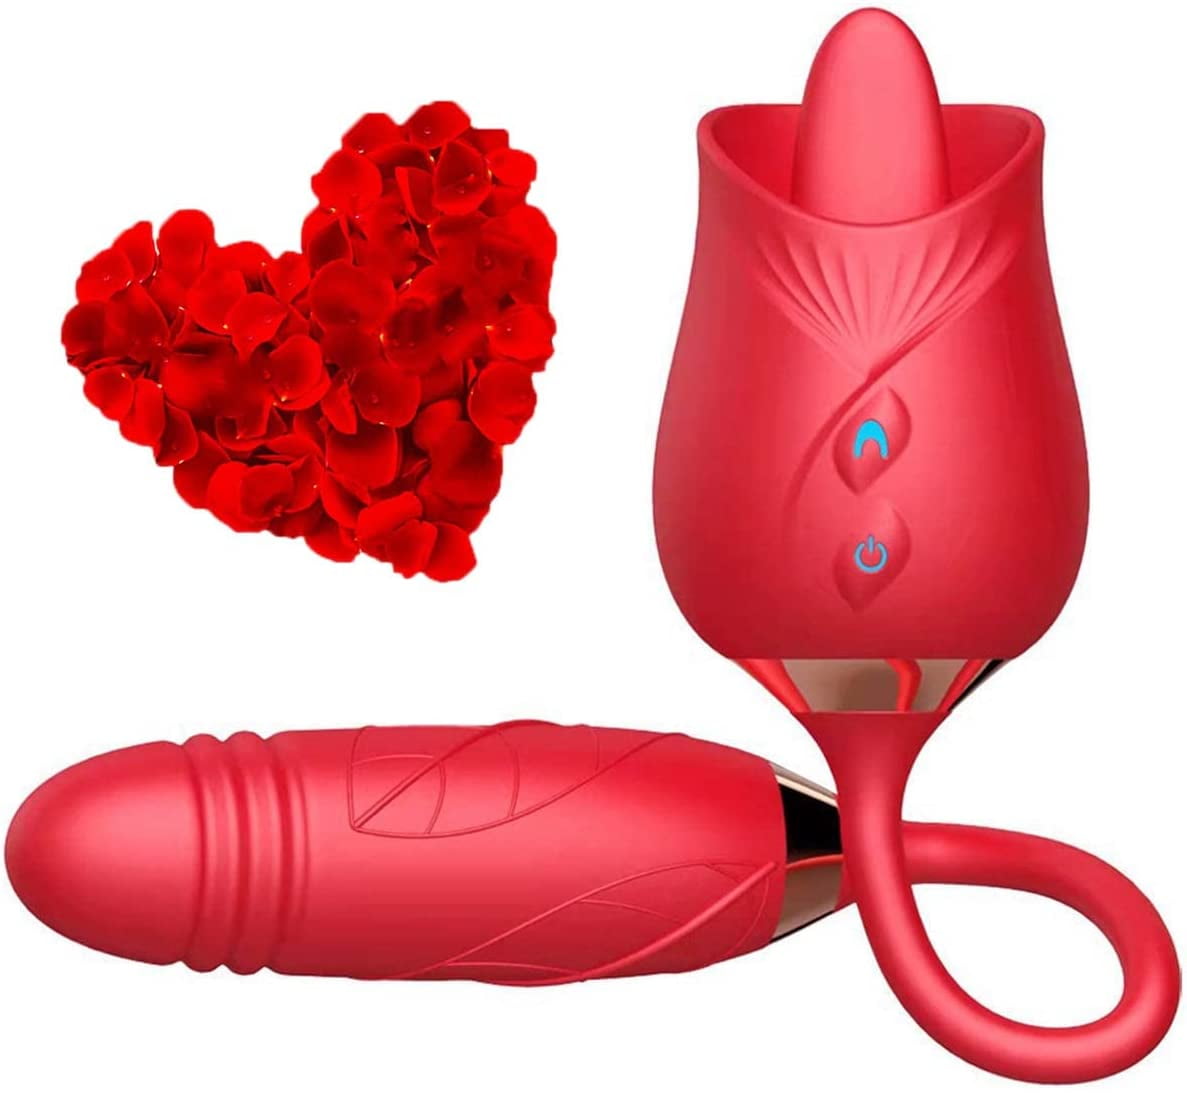 G Spot Adult Sensory Toys Sex Toy for Women Pleasure Adult Toys image